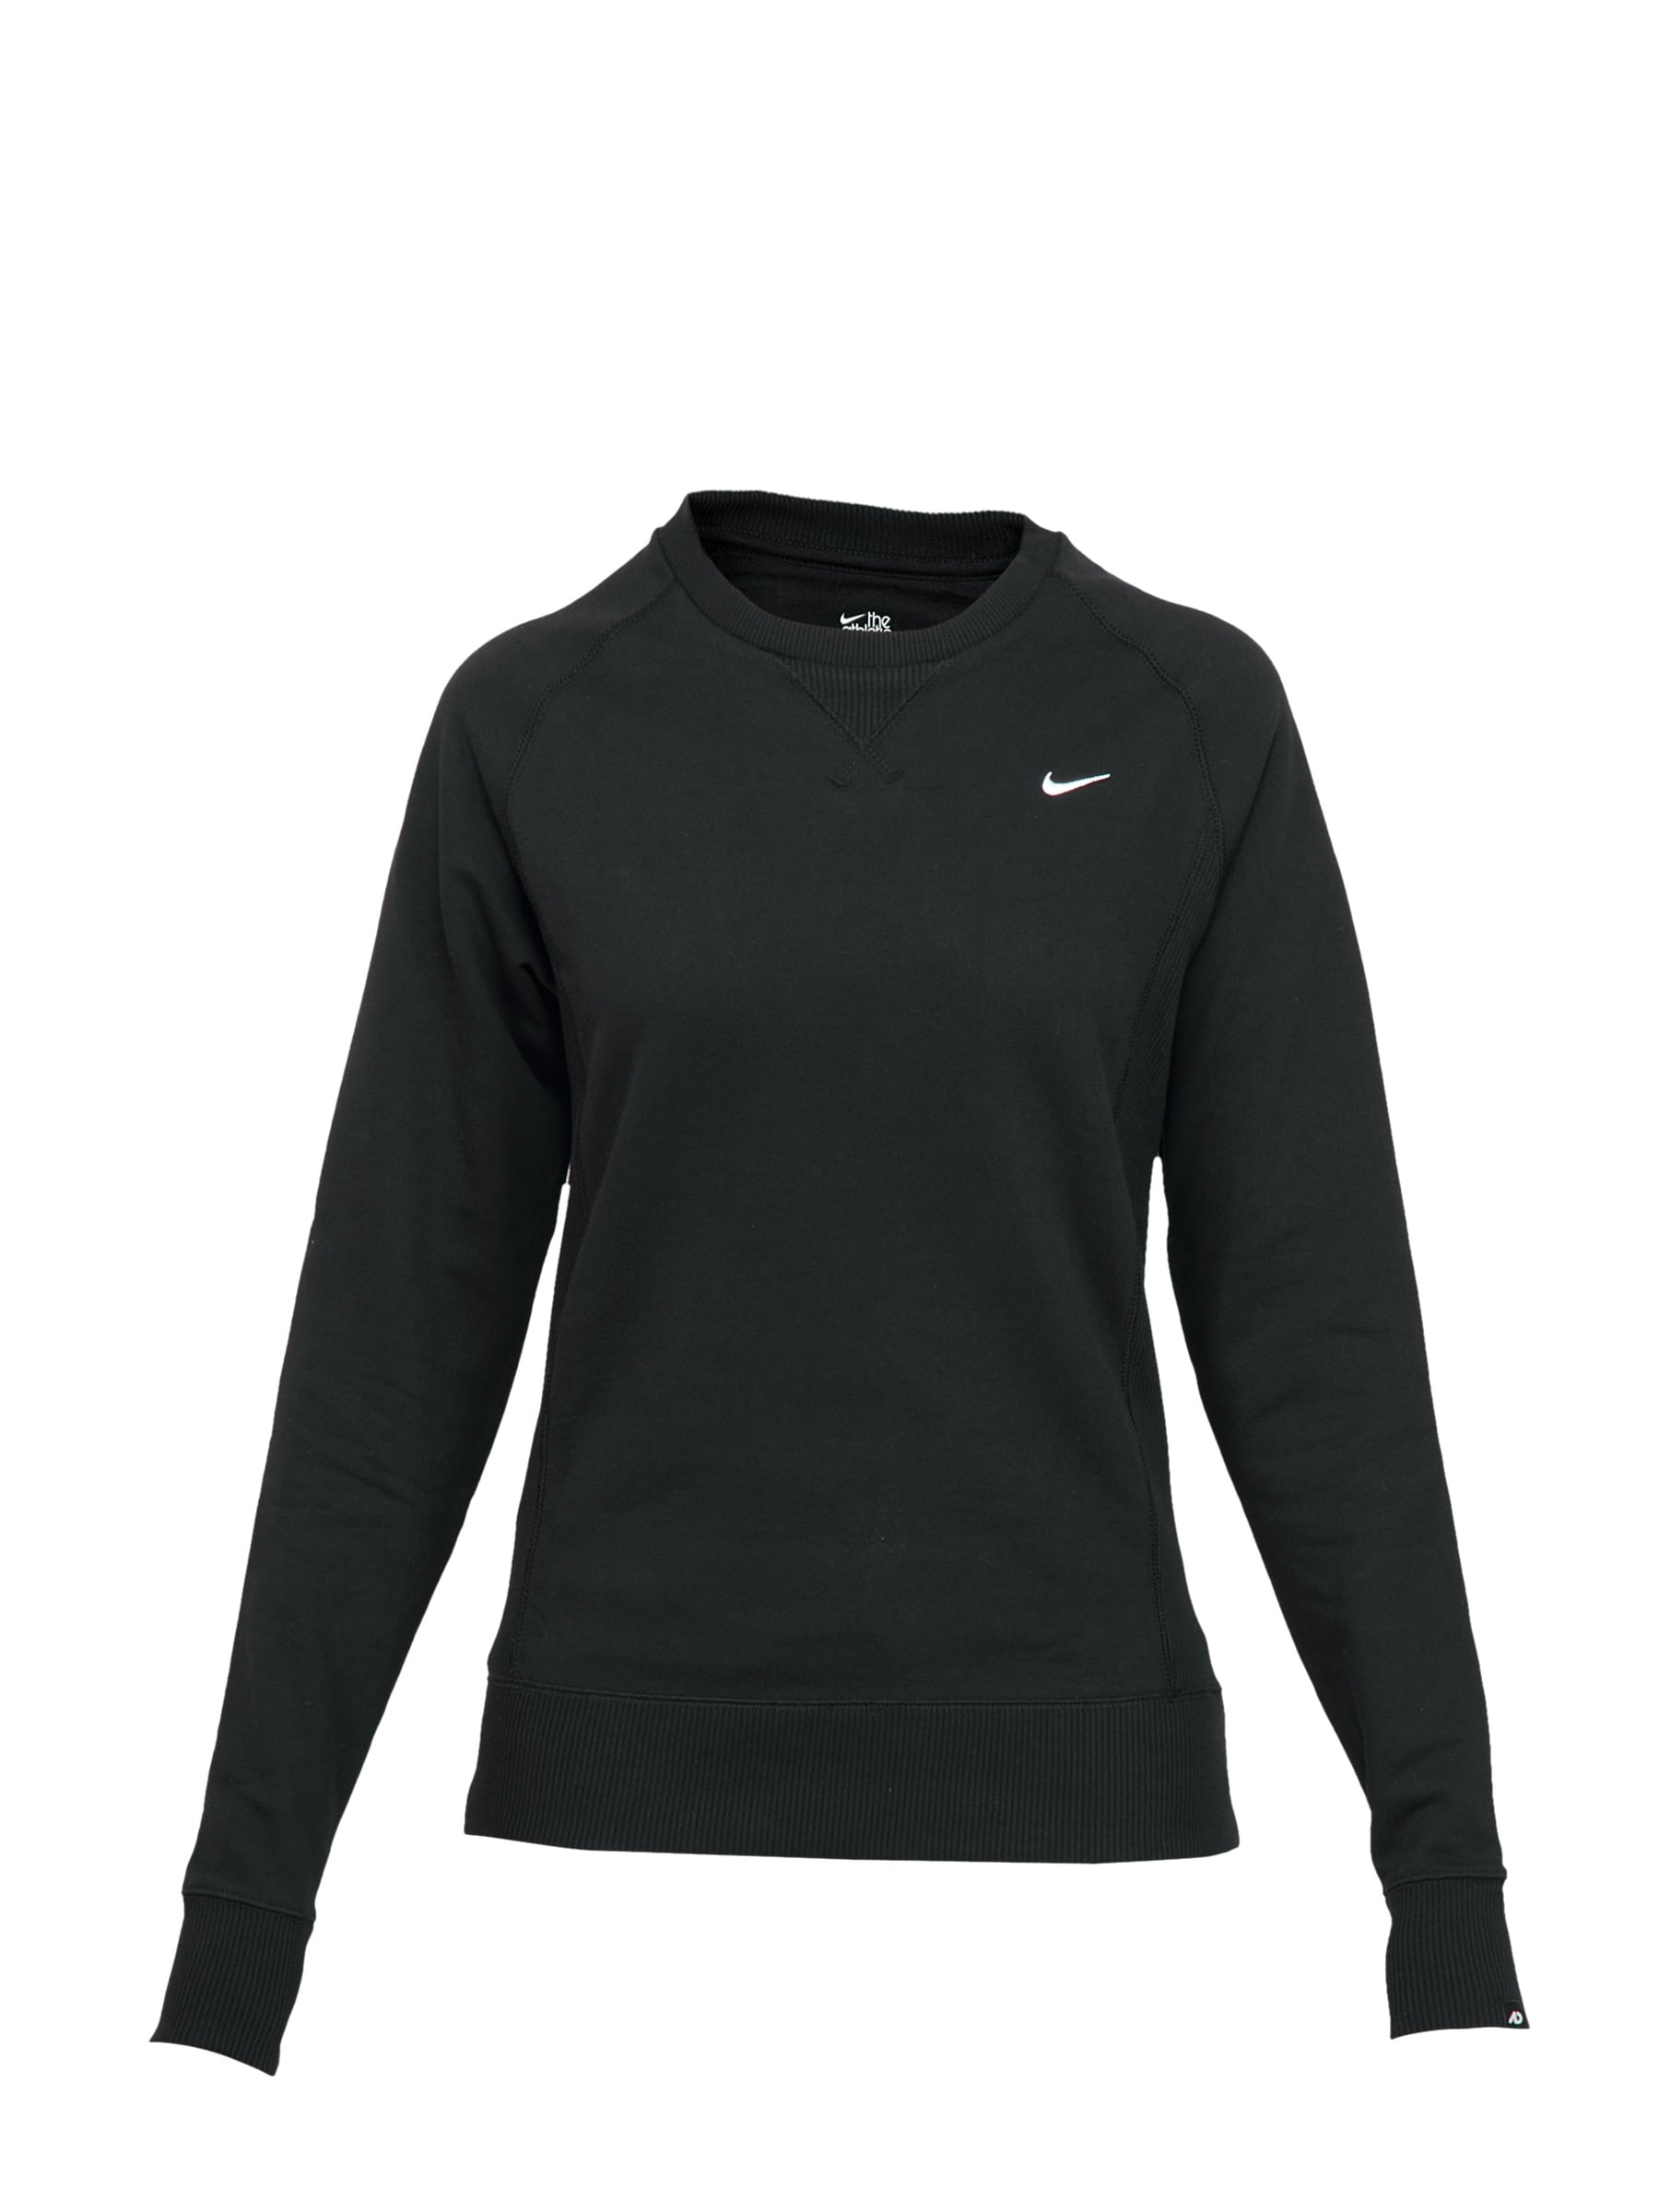 Nike Women Sptcas Black Sweatshirt